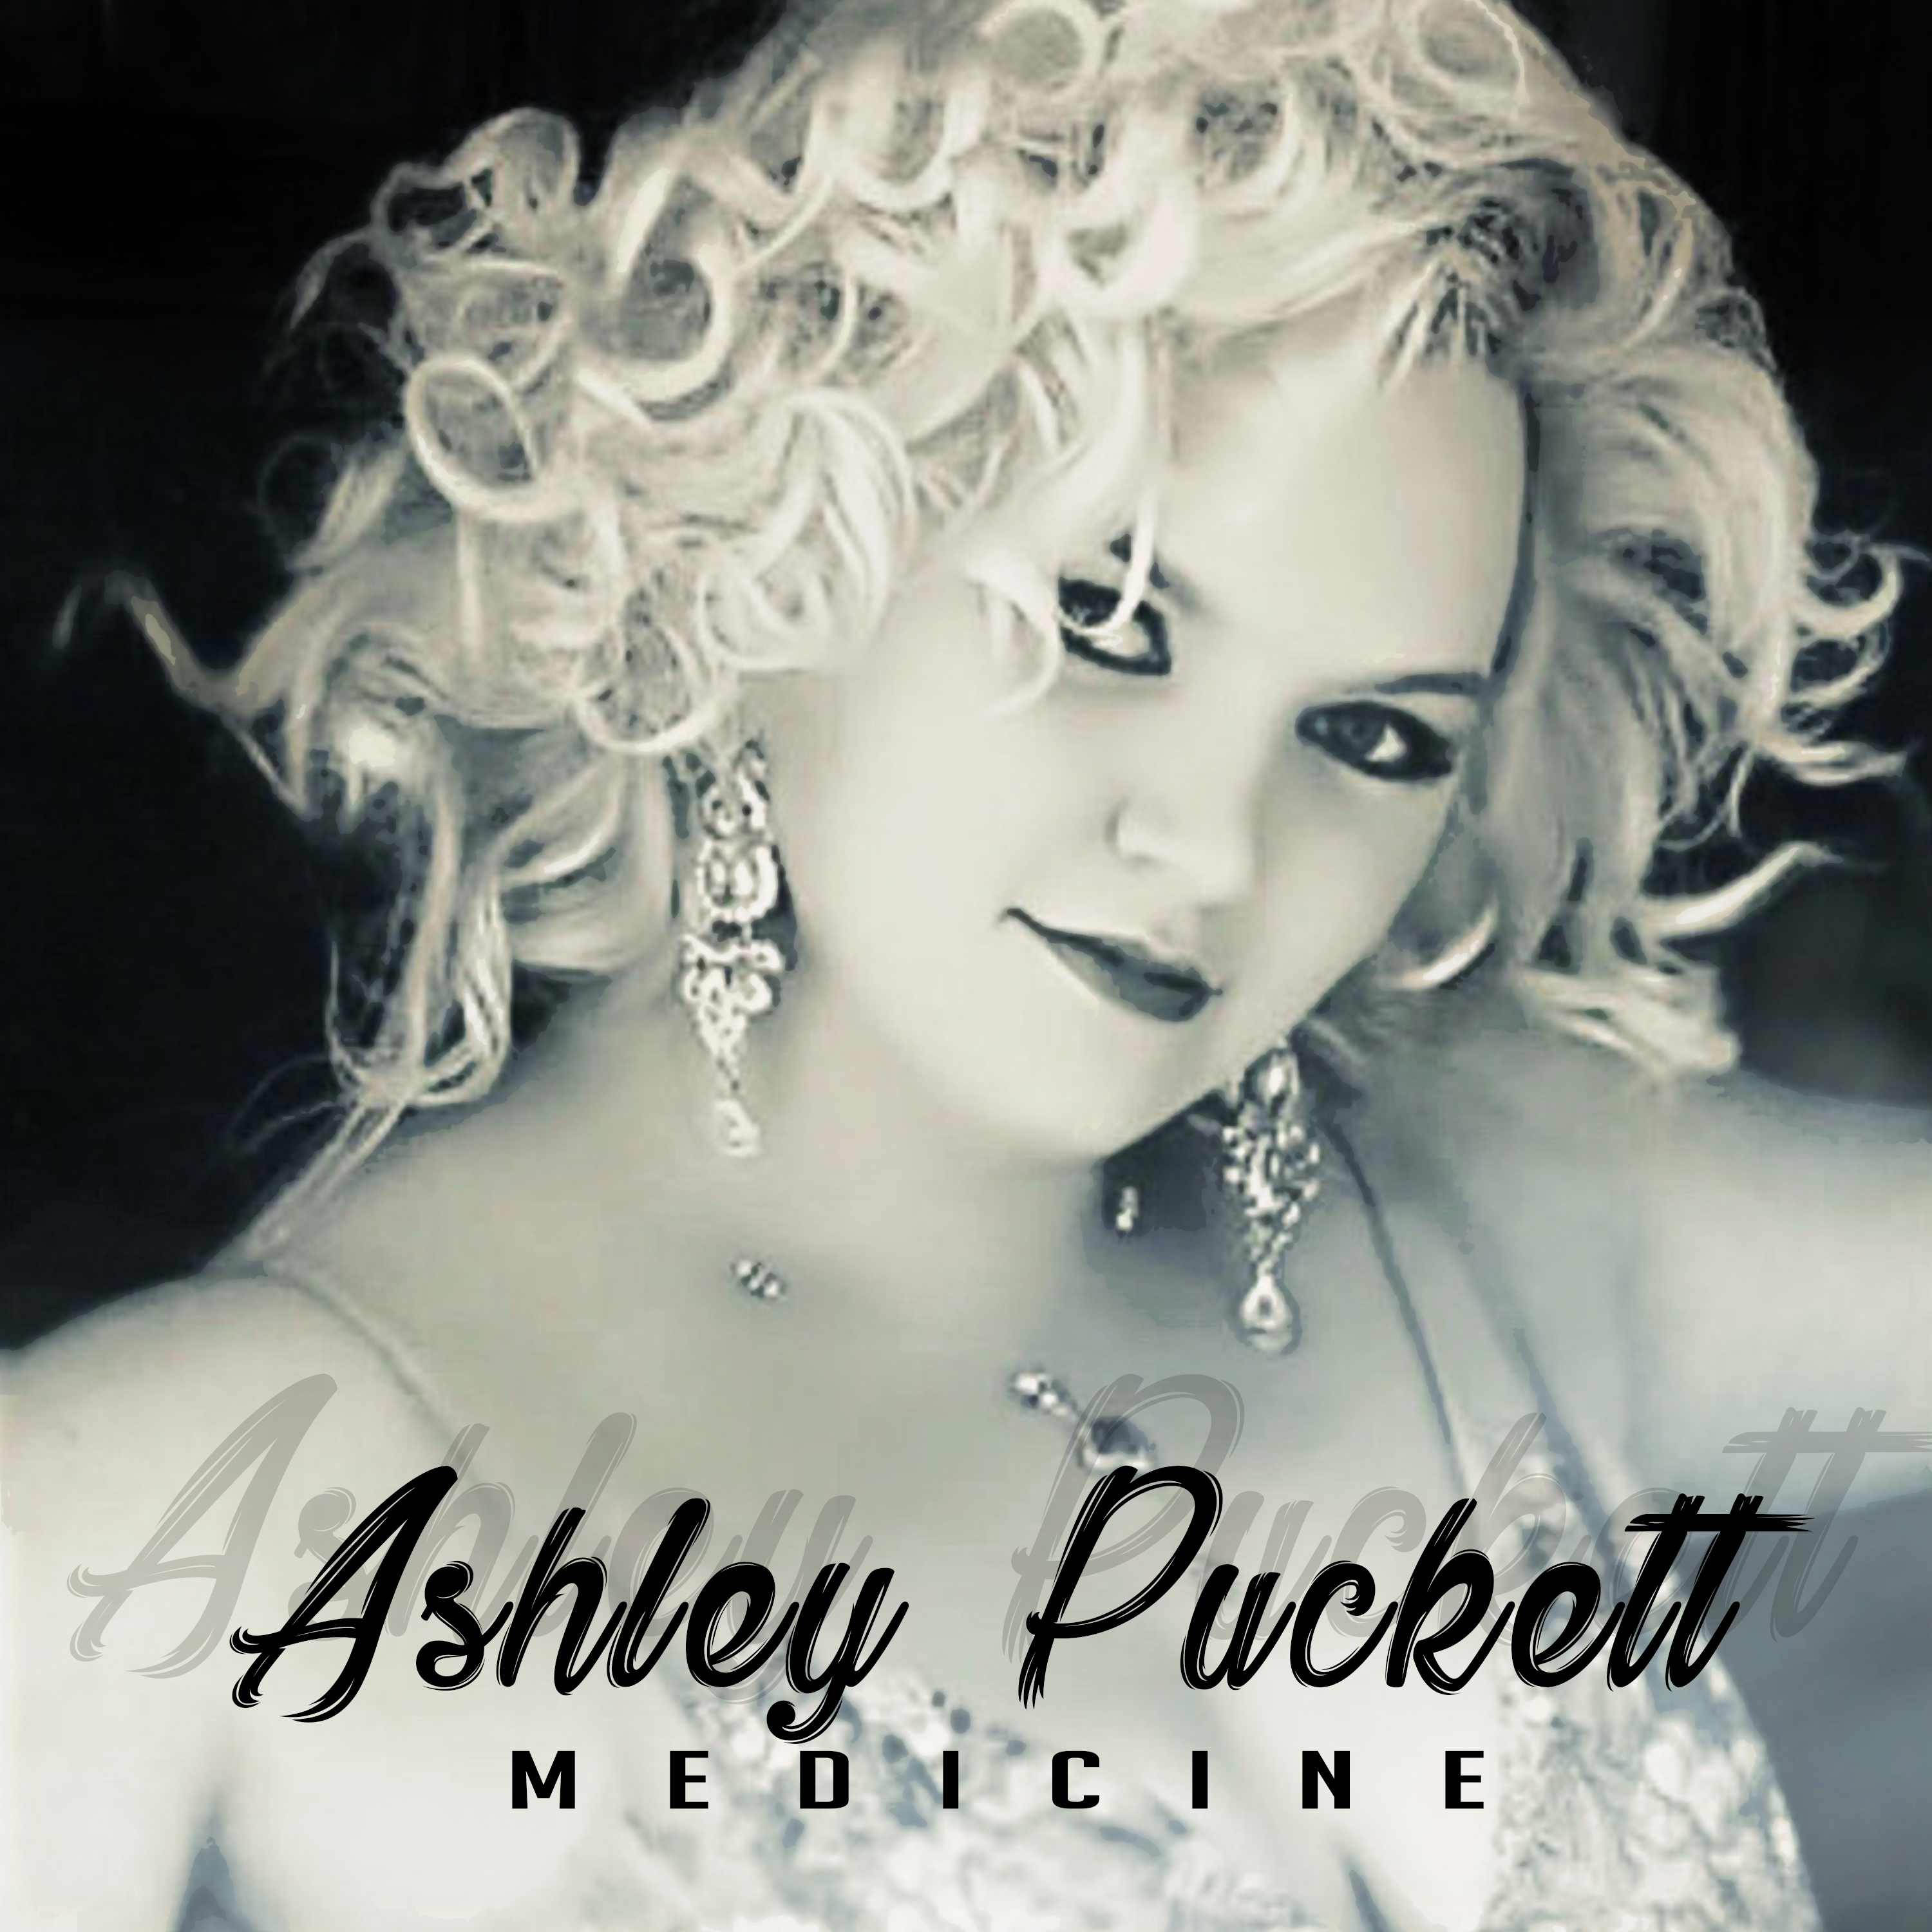 Ashley Puckett medicine cover